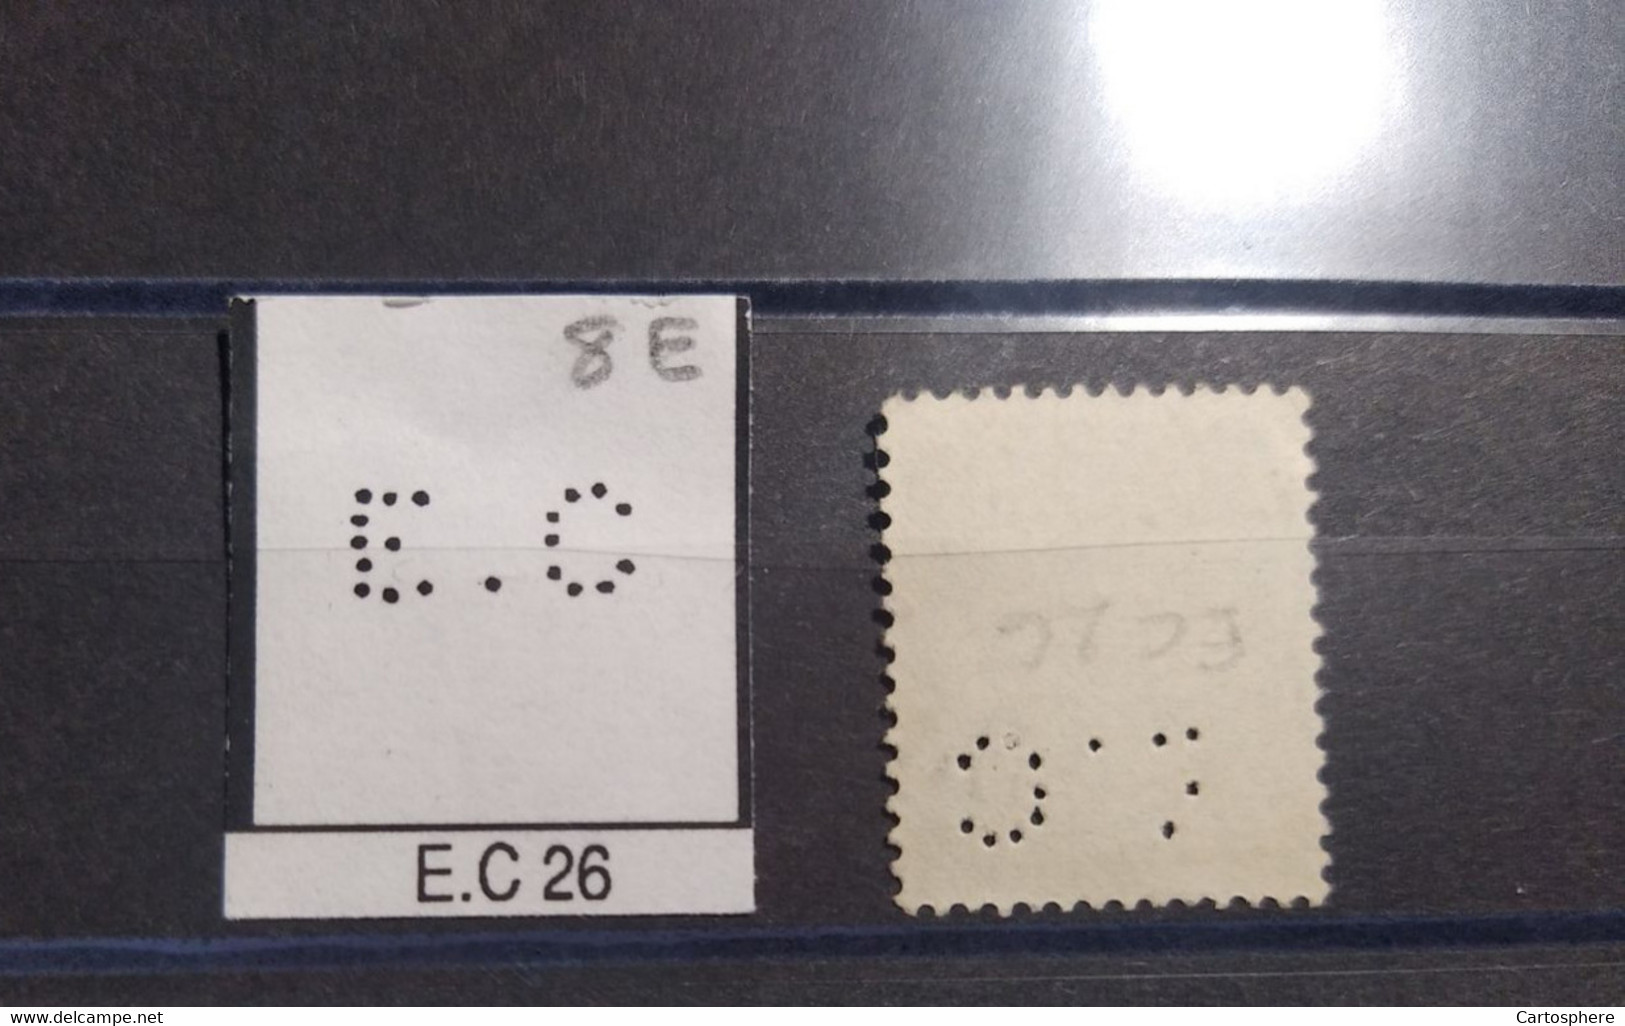 FRANCE E.C 26 TIMBRE EC26 INDICE 8 SUR MOUCHON PERFORE PERFORES PERFIN PERFINS PERFO PERFORATION PERFORIERT - Used Stamps